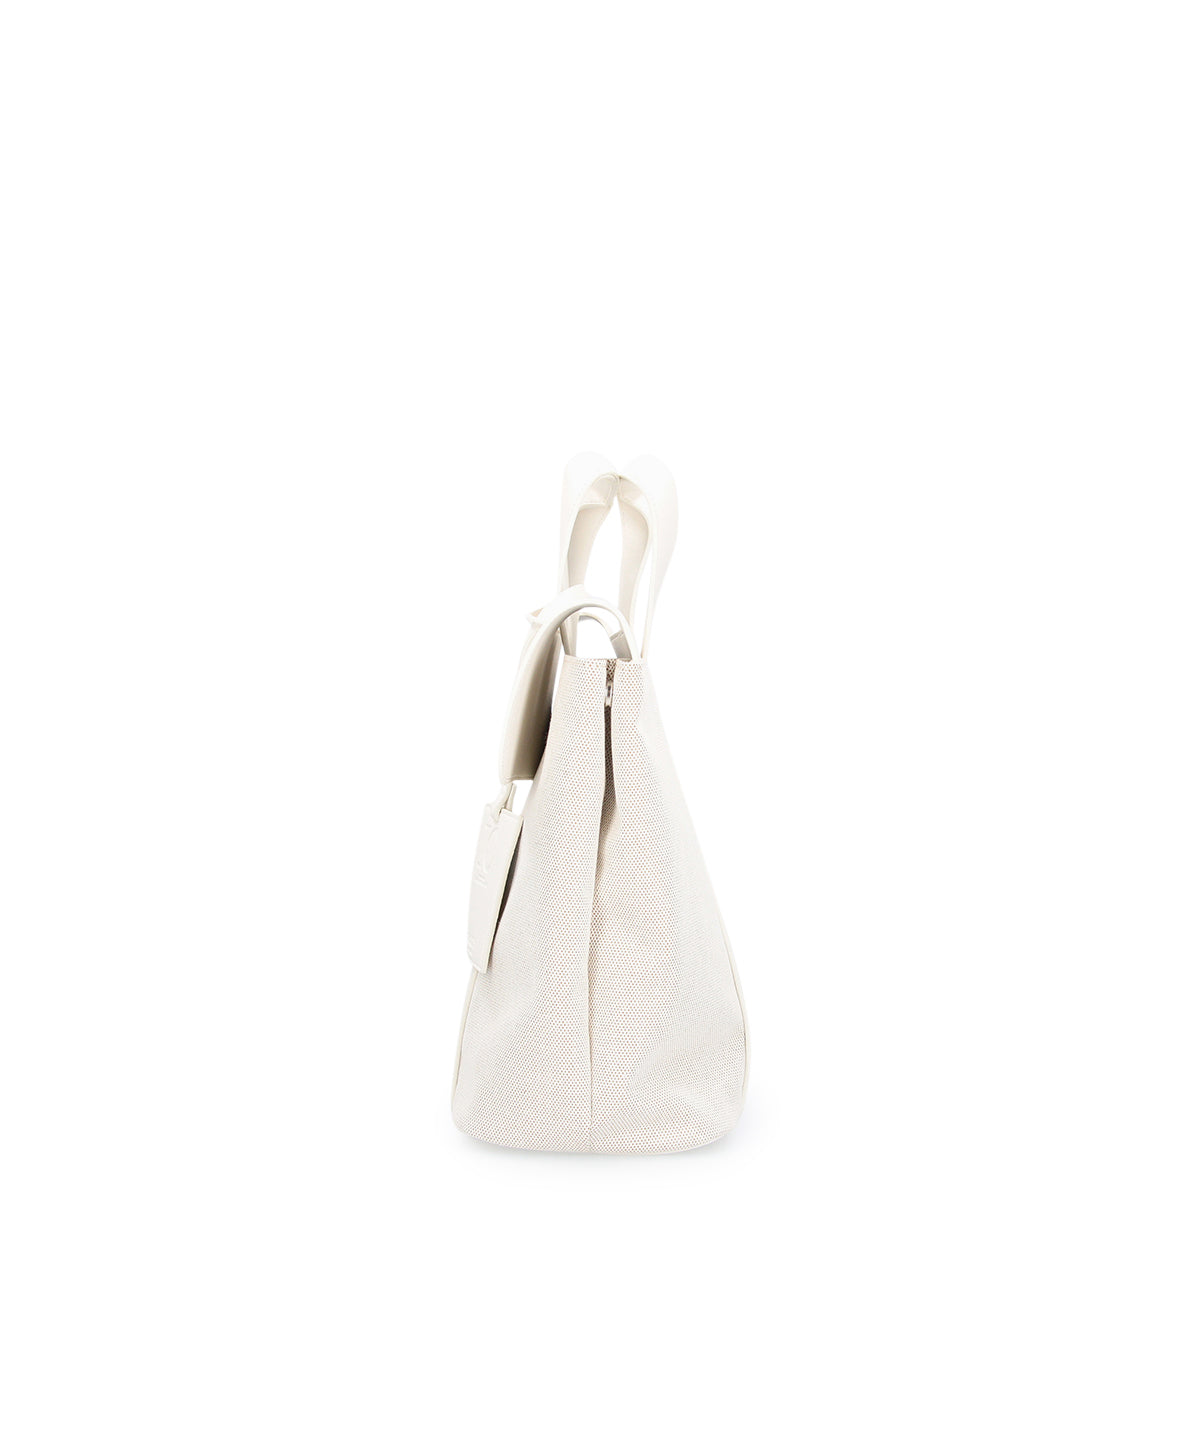 Two Tone Kente Bag (Medium)WHITE